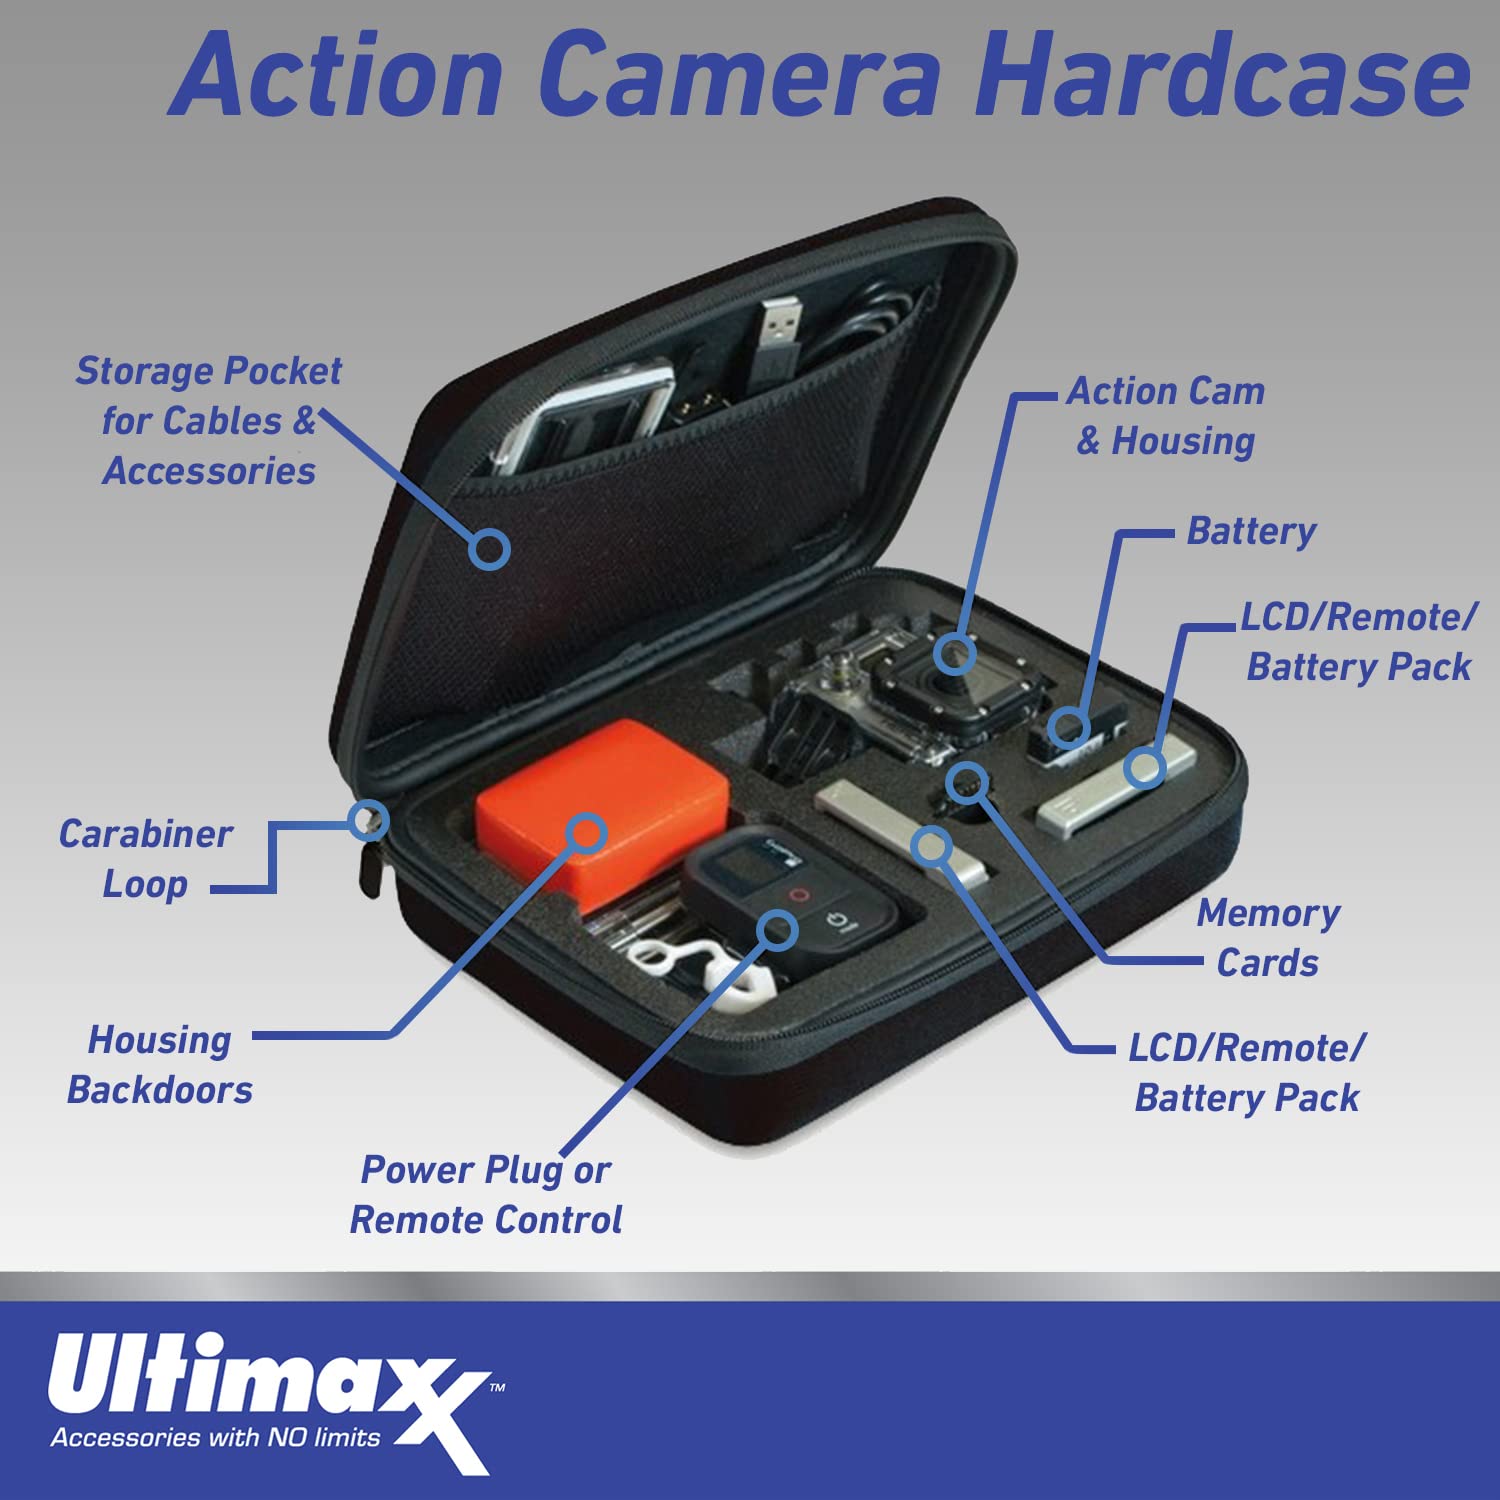 Ultimaxx Premium Bundle + GoPro HERO11 (Hero 11) SanDisk Ultra 64GB microSD Memory Card, Replacement Battery, 40M Underwater LED Light w/Bracket, Housing & Much More (31pc Bundle) Black